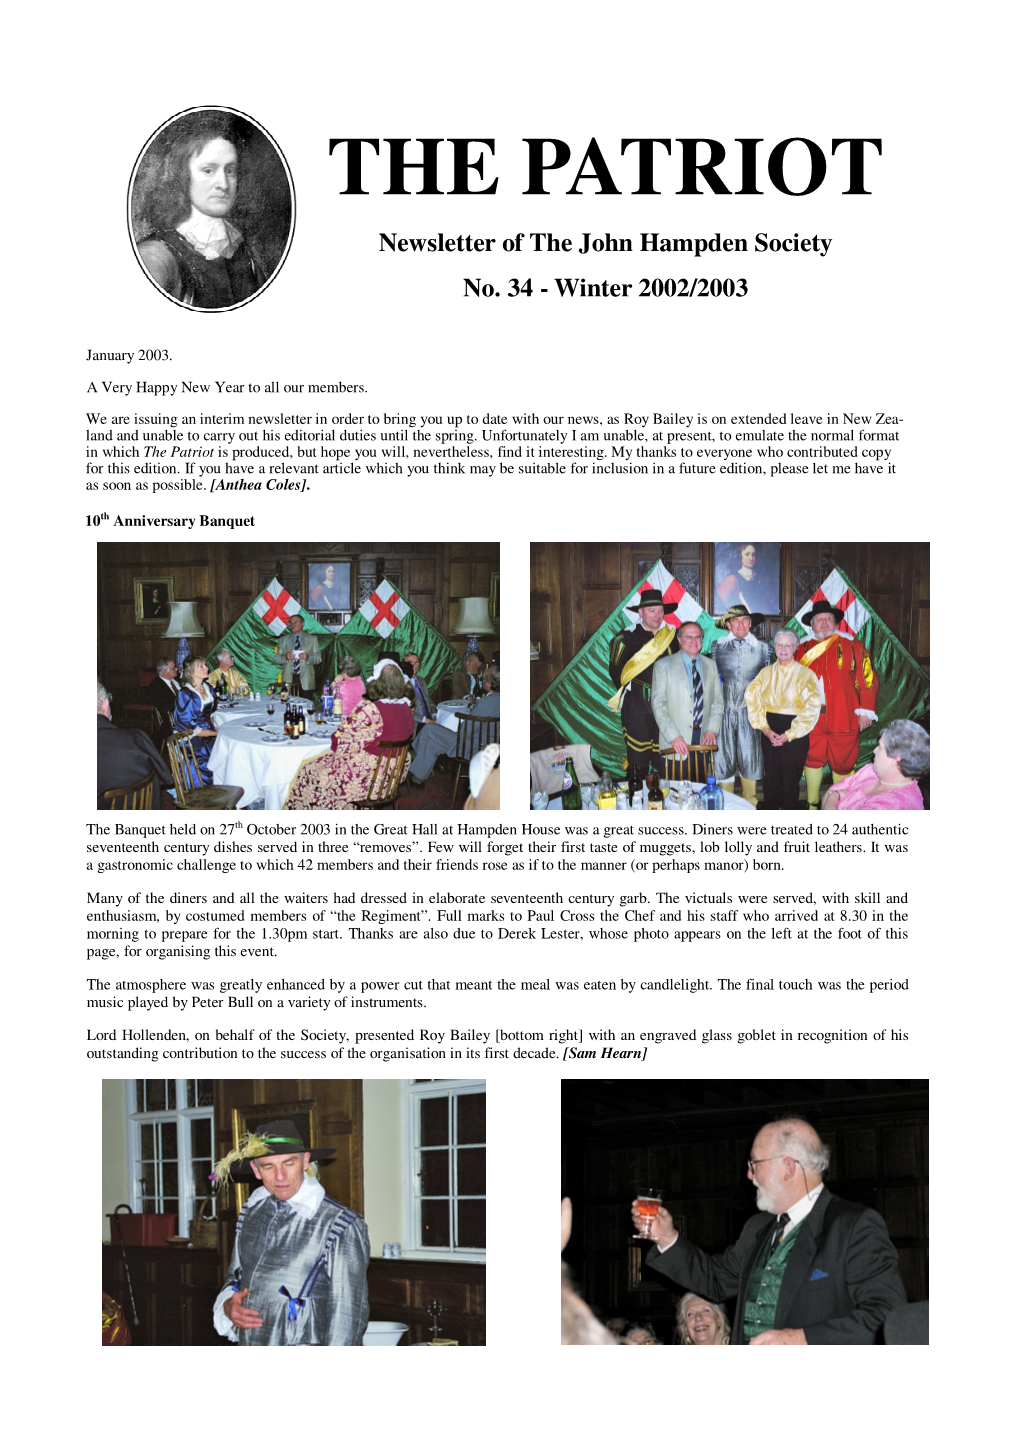 THE PATRIOT Newsletter of the John Hampden Society No